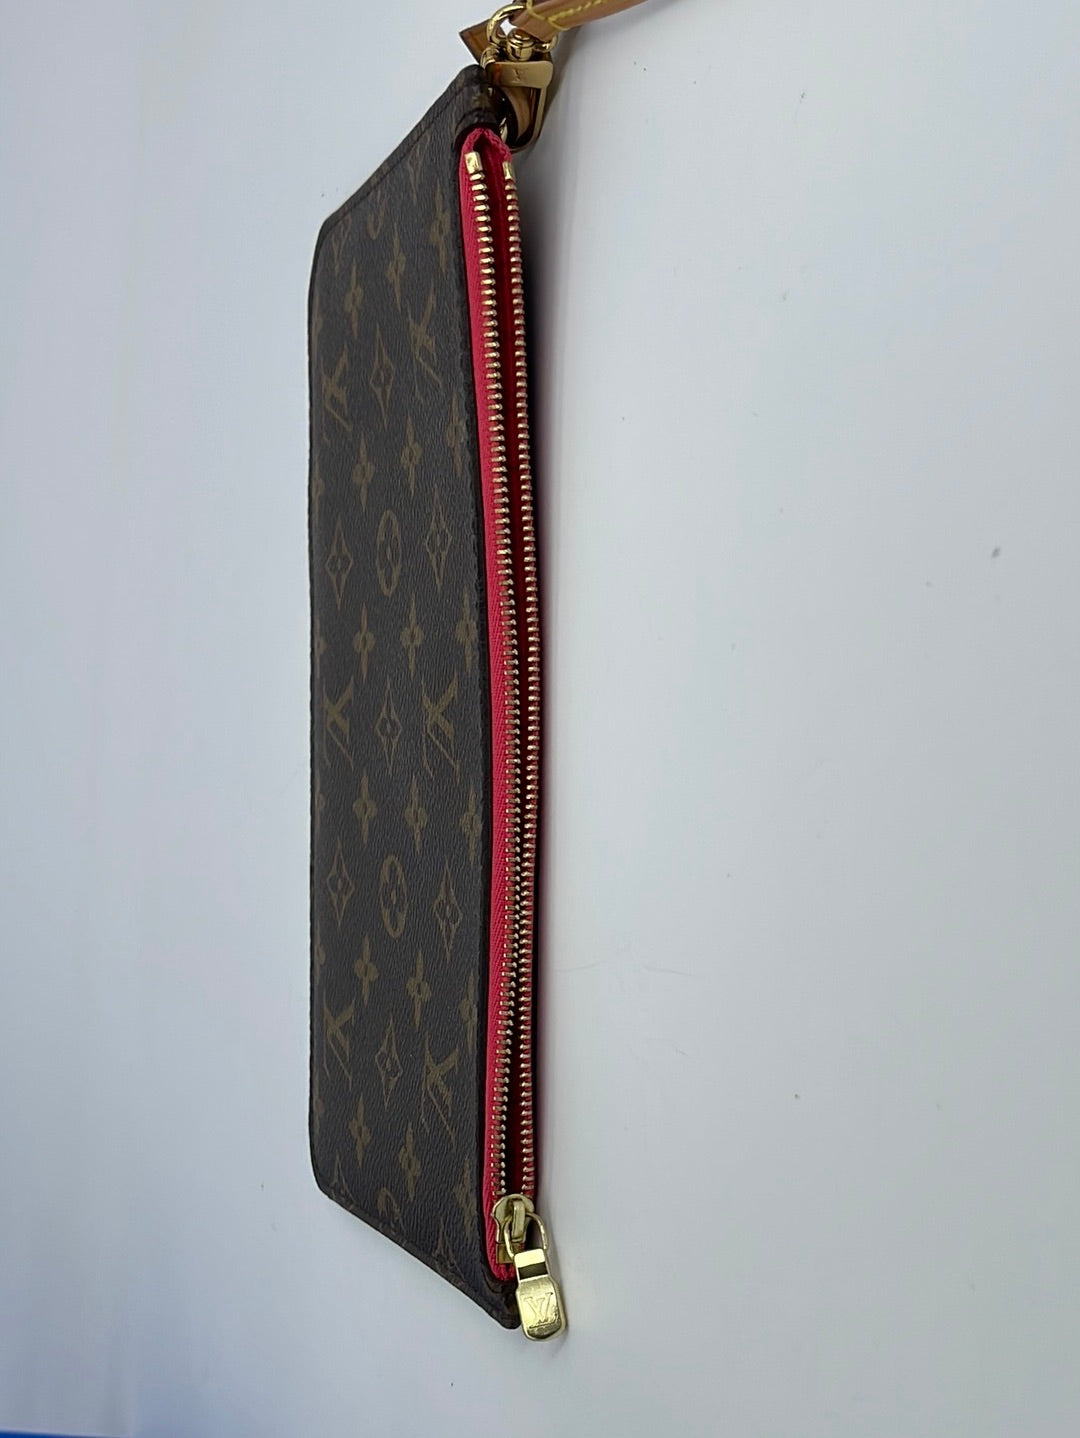 Louis Vuitton Neverfull Monogram Canvas Pochette Wristlet Zip